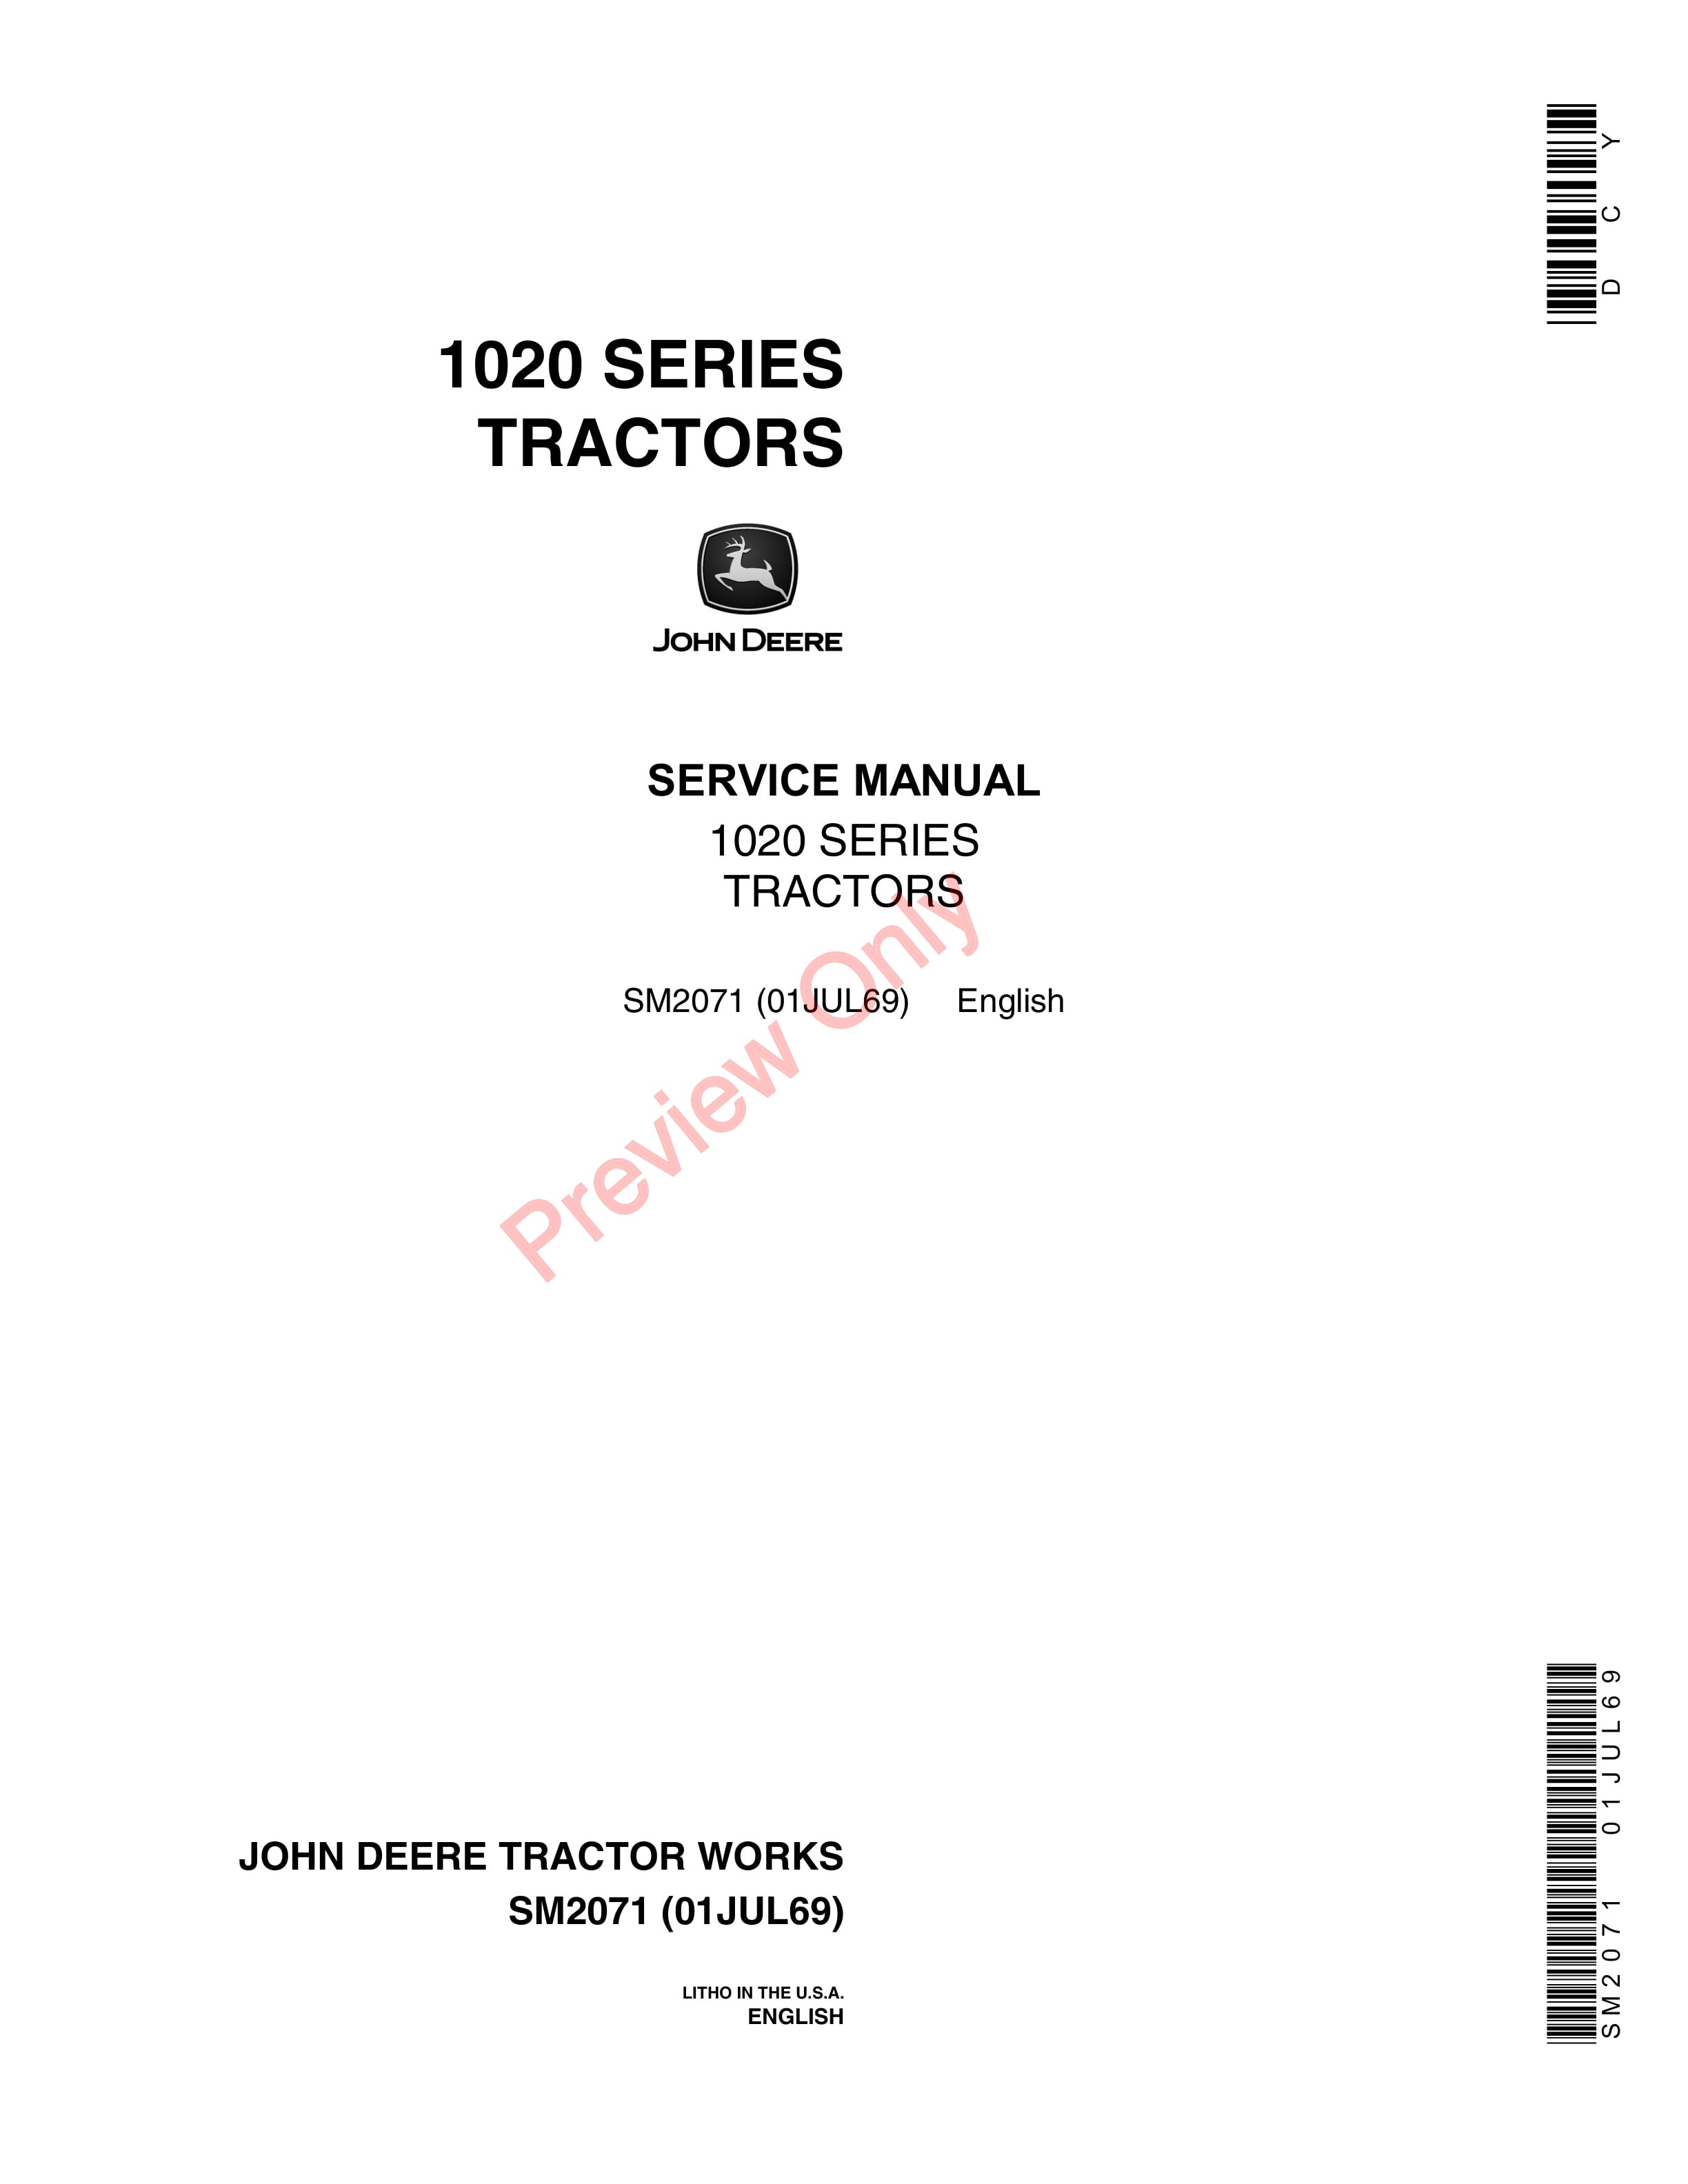 John Deere 1020 Series Tractors Service Manual SM2071 01JUL69-1